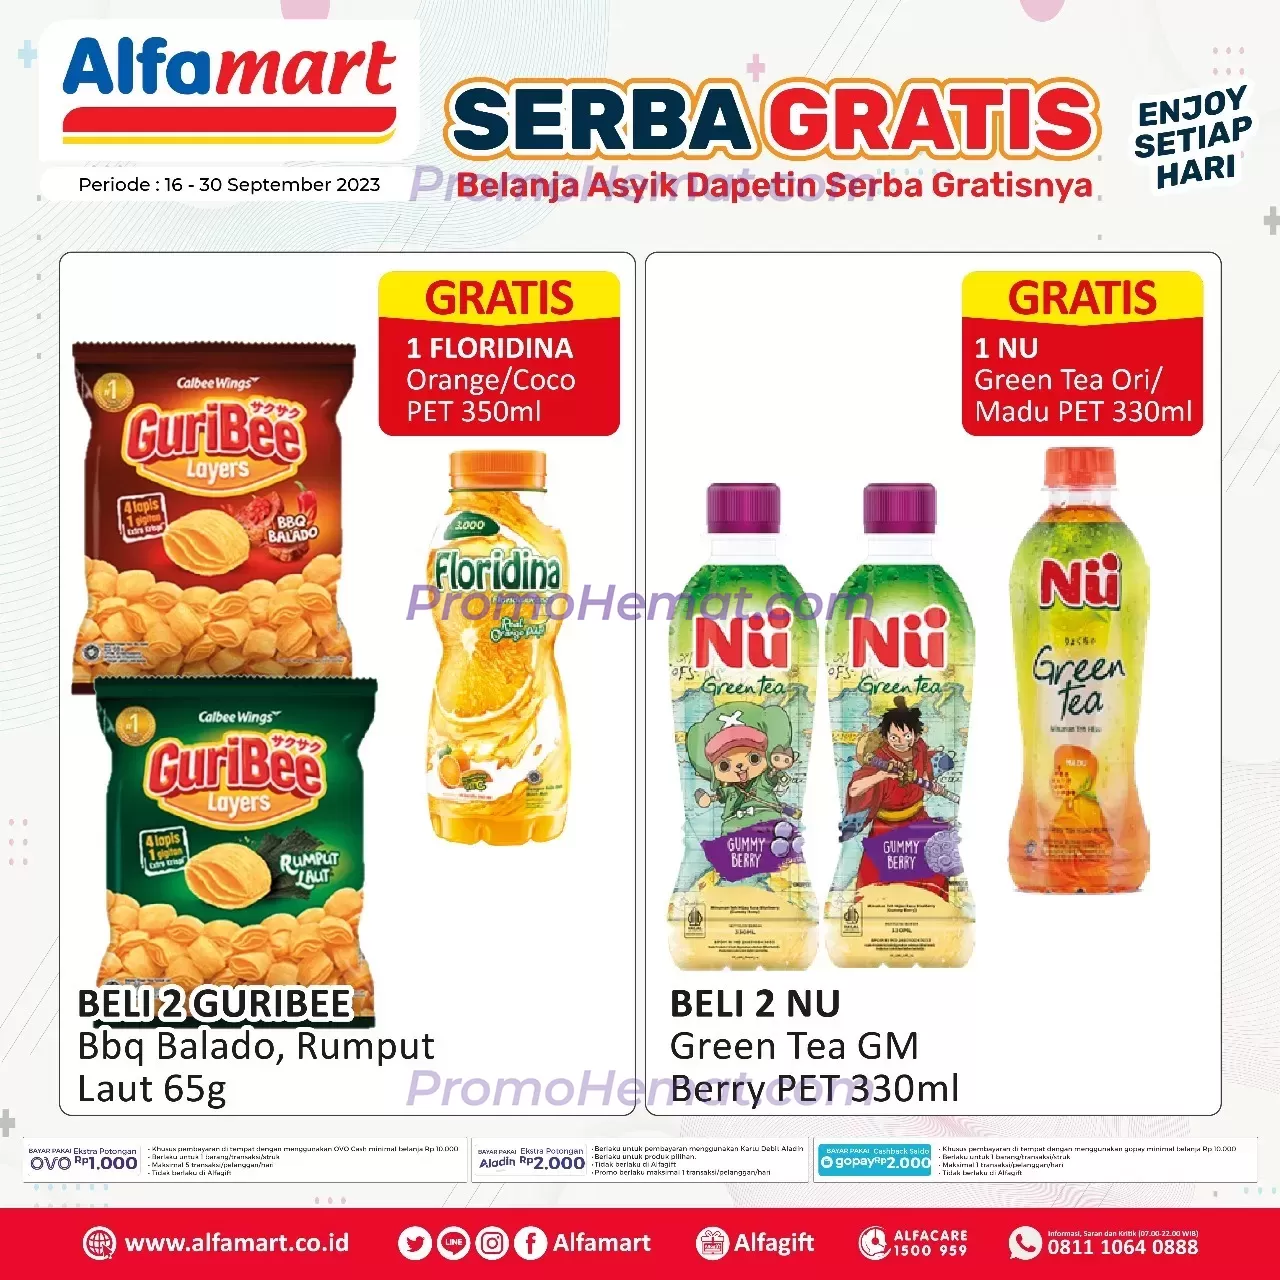 Promo Serba Gratis Alfamart Periode 16 - 30 September 2023 image_6